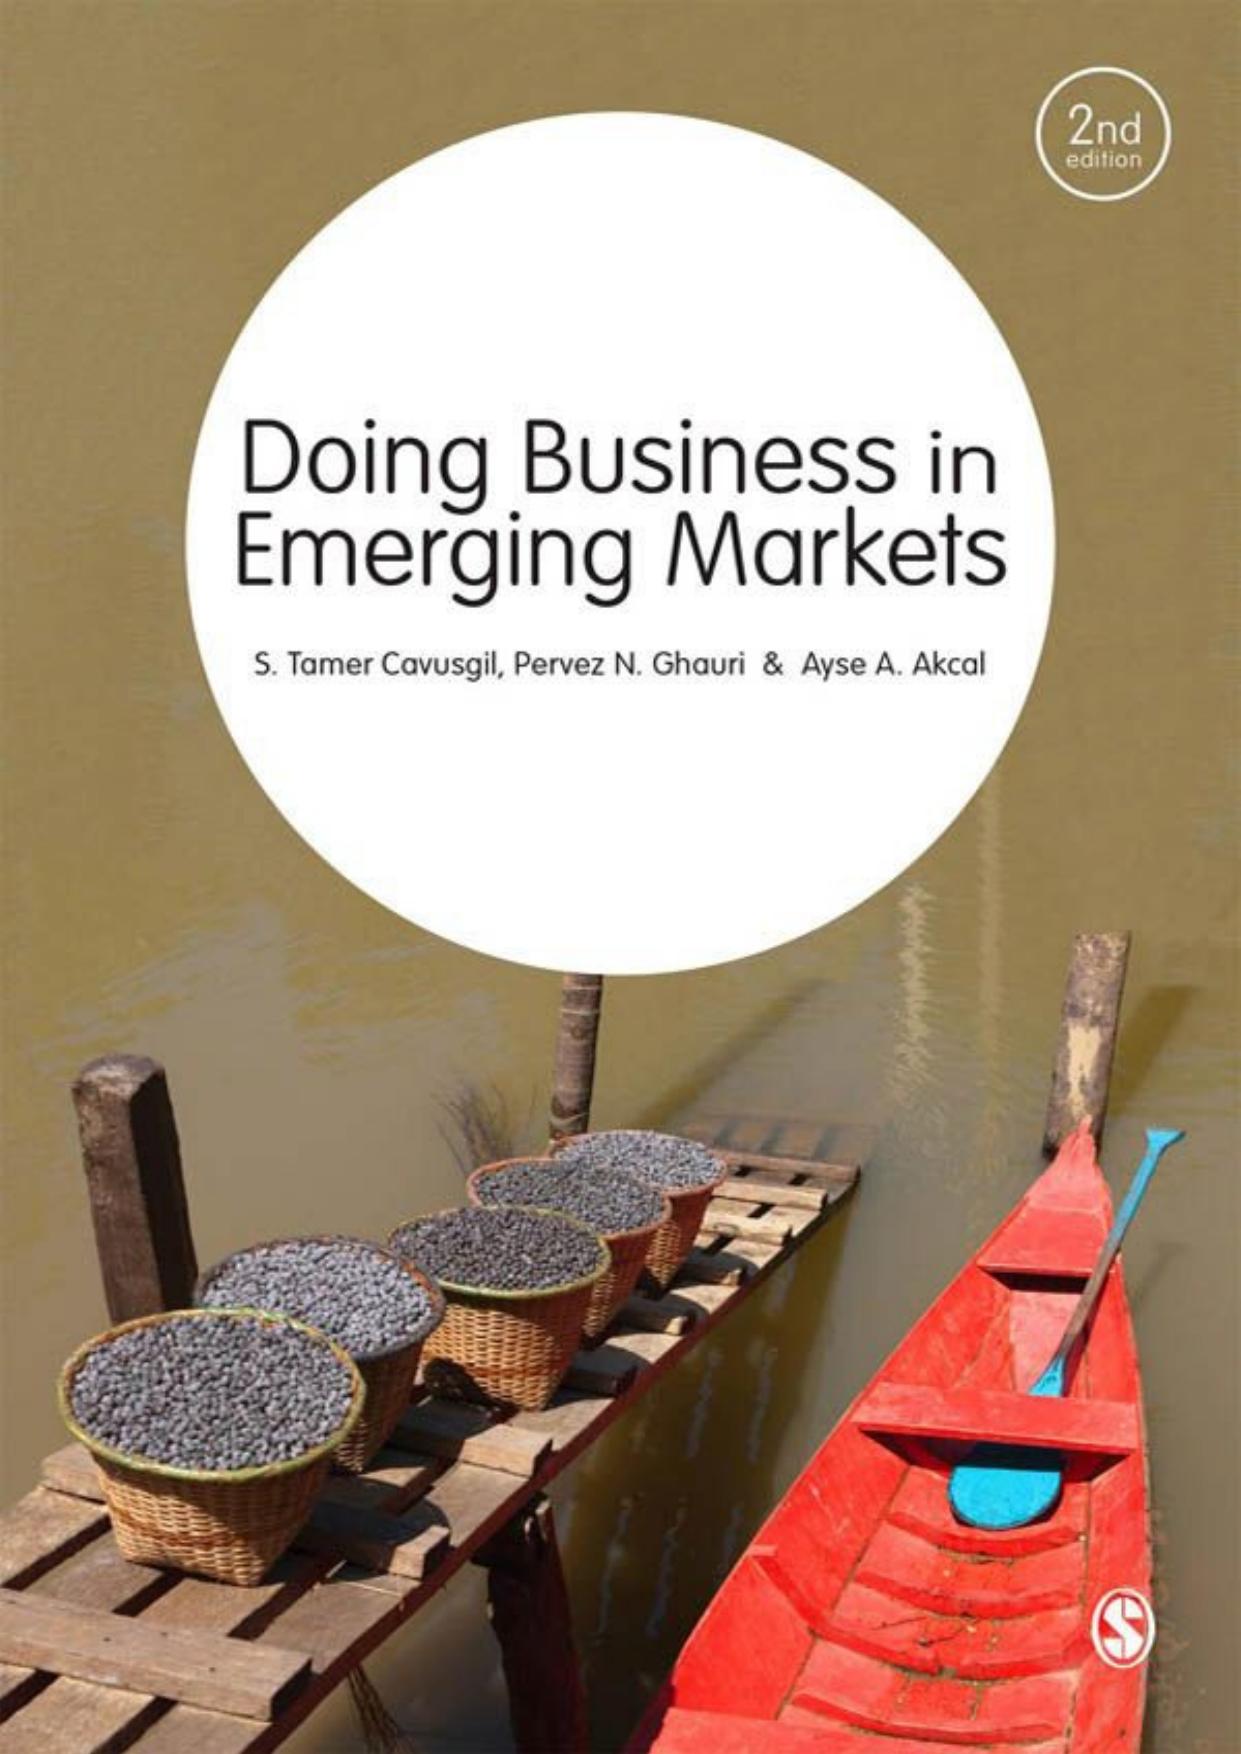 Doing Business in Emerging Markets - S Tamer Cavusgil & Pervez N. Ghauri & Ayse A Akcal.jpg